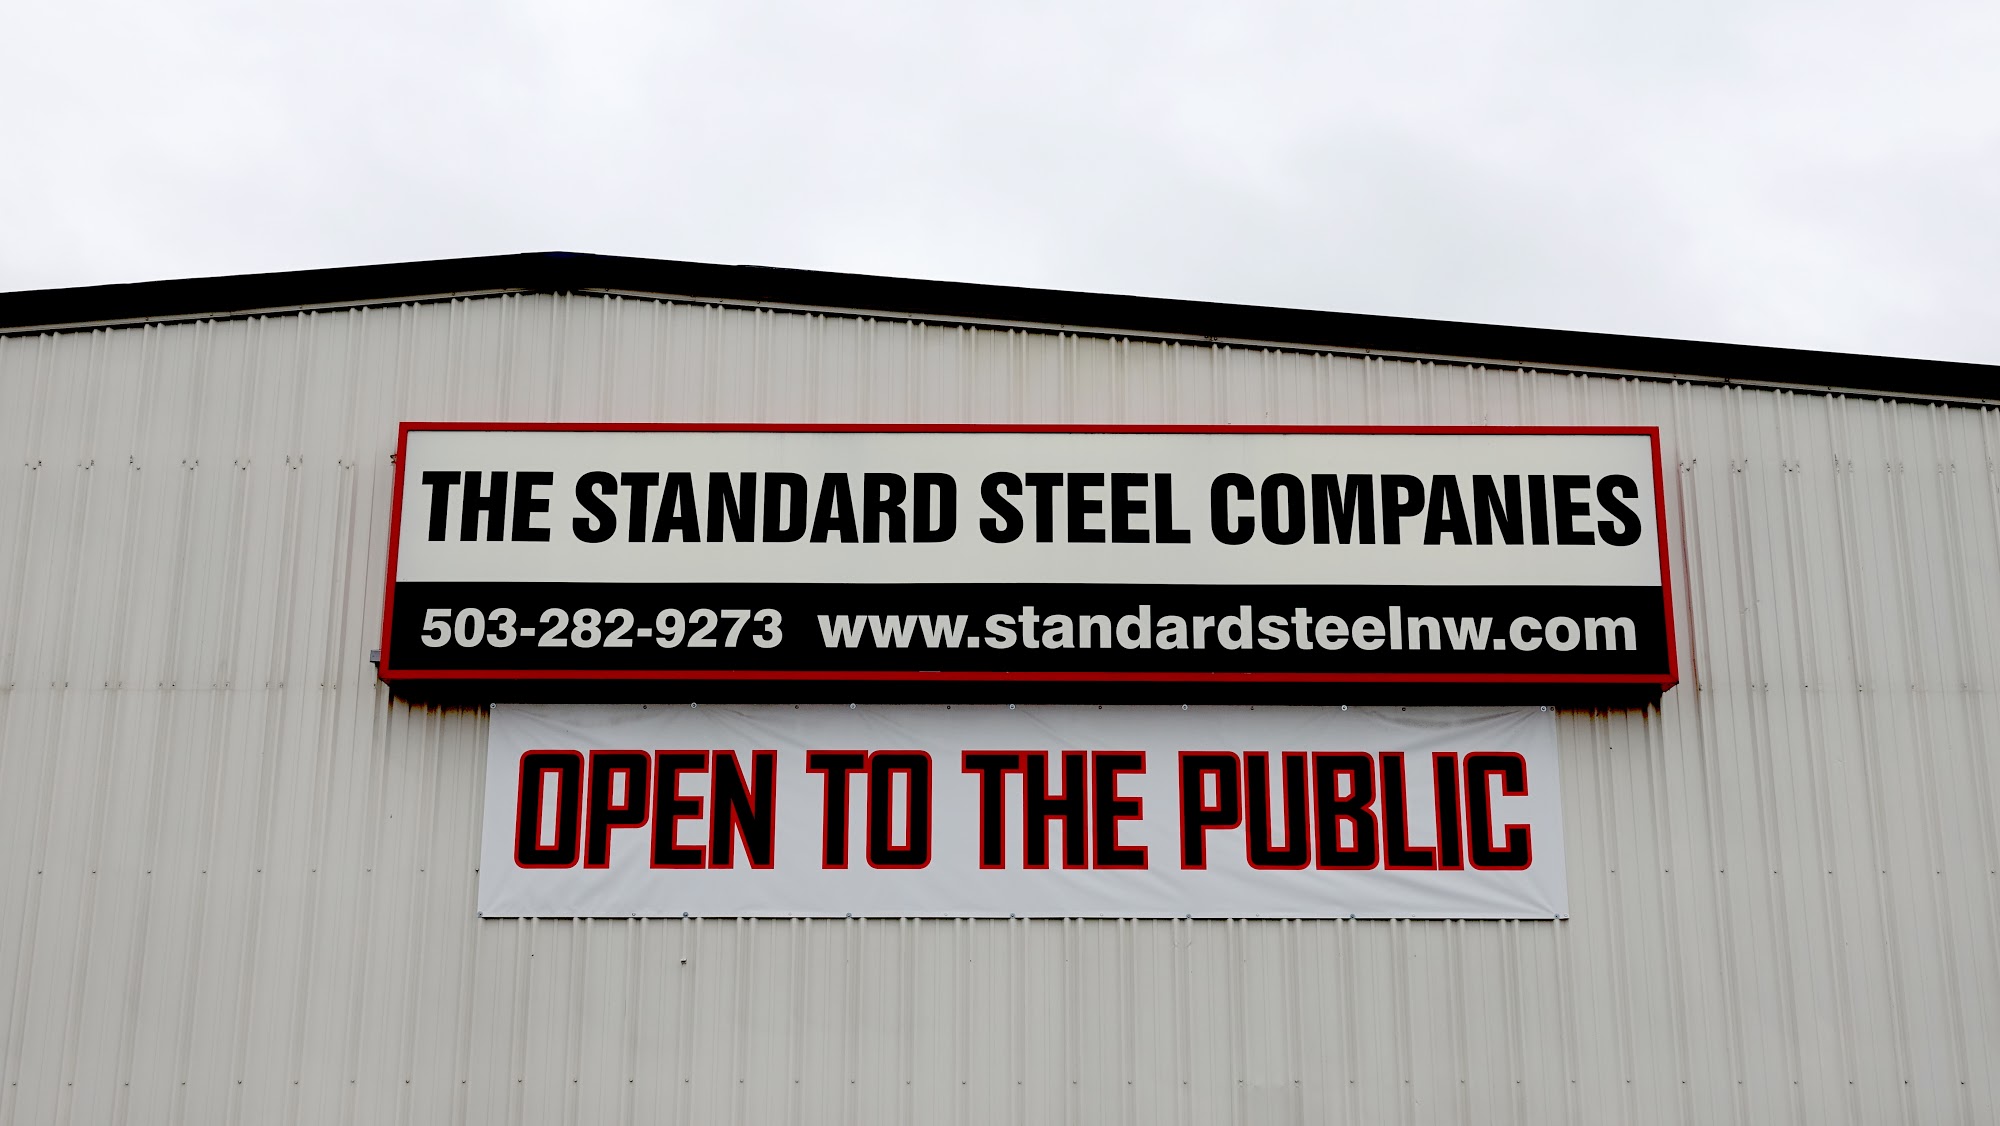 The Standard Steel Companies